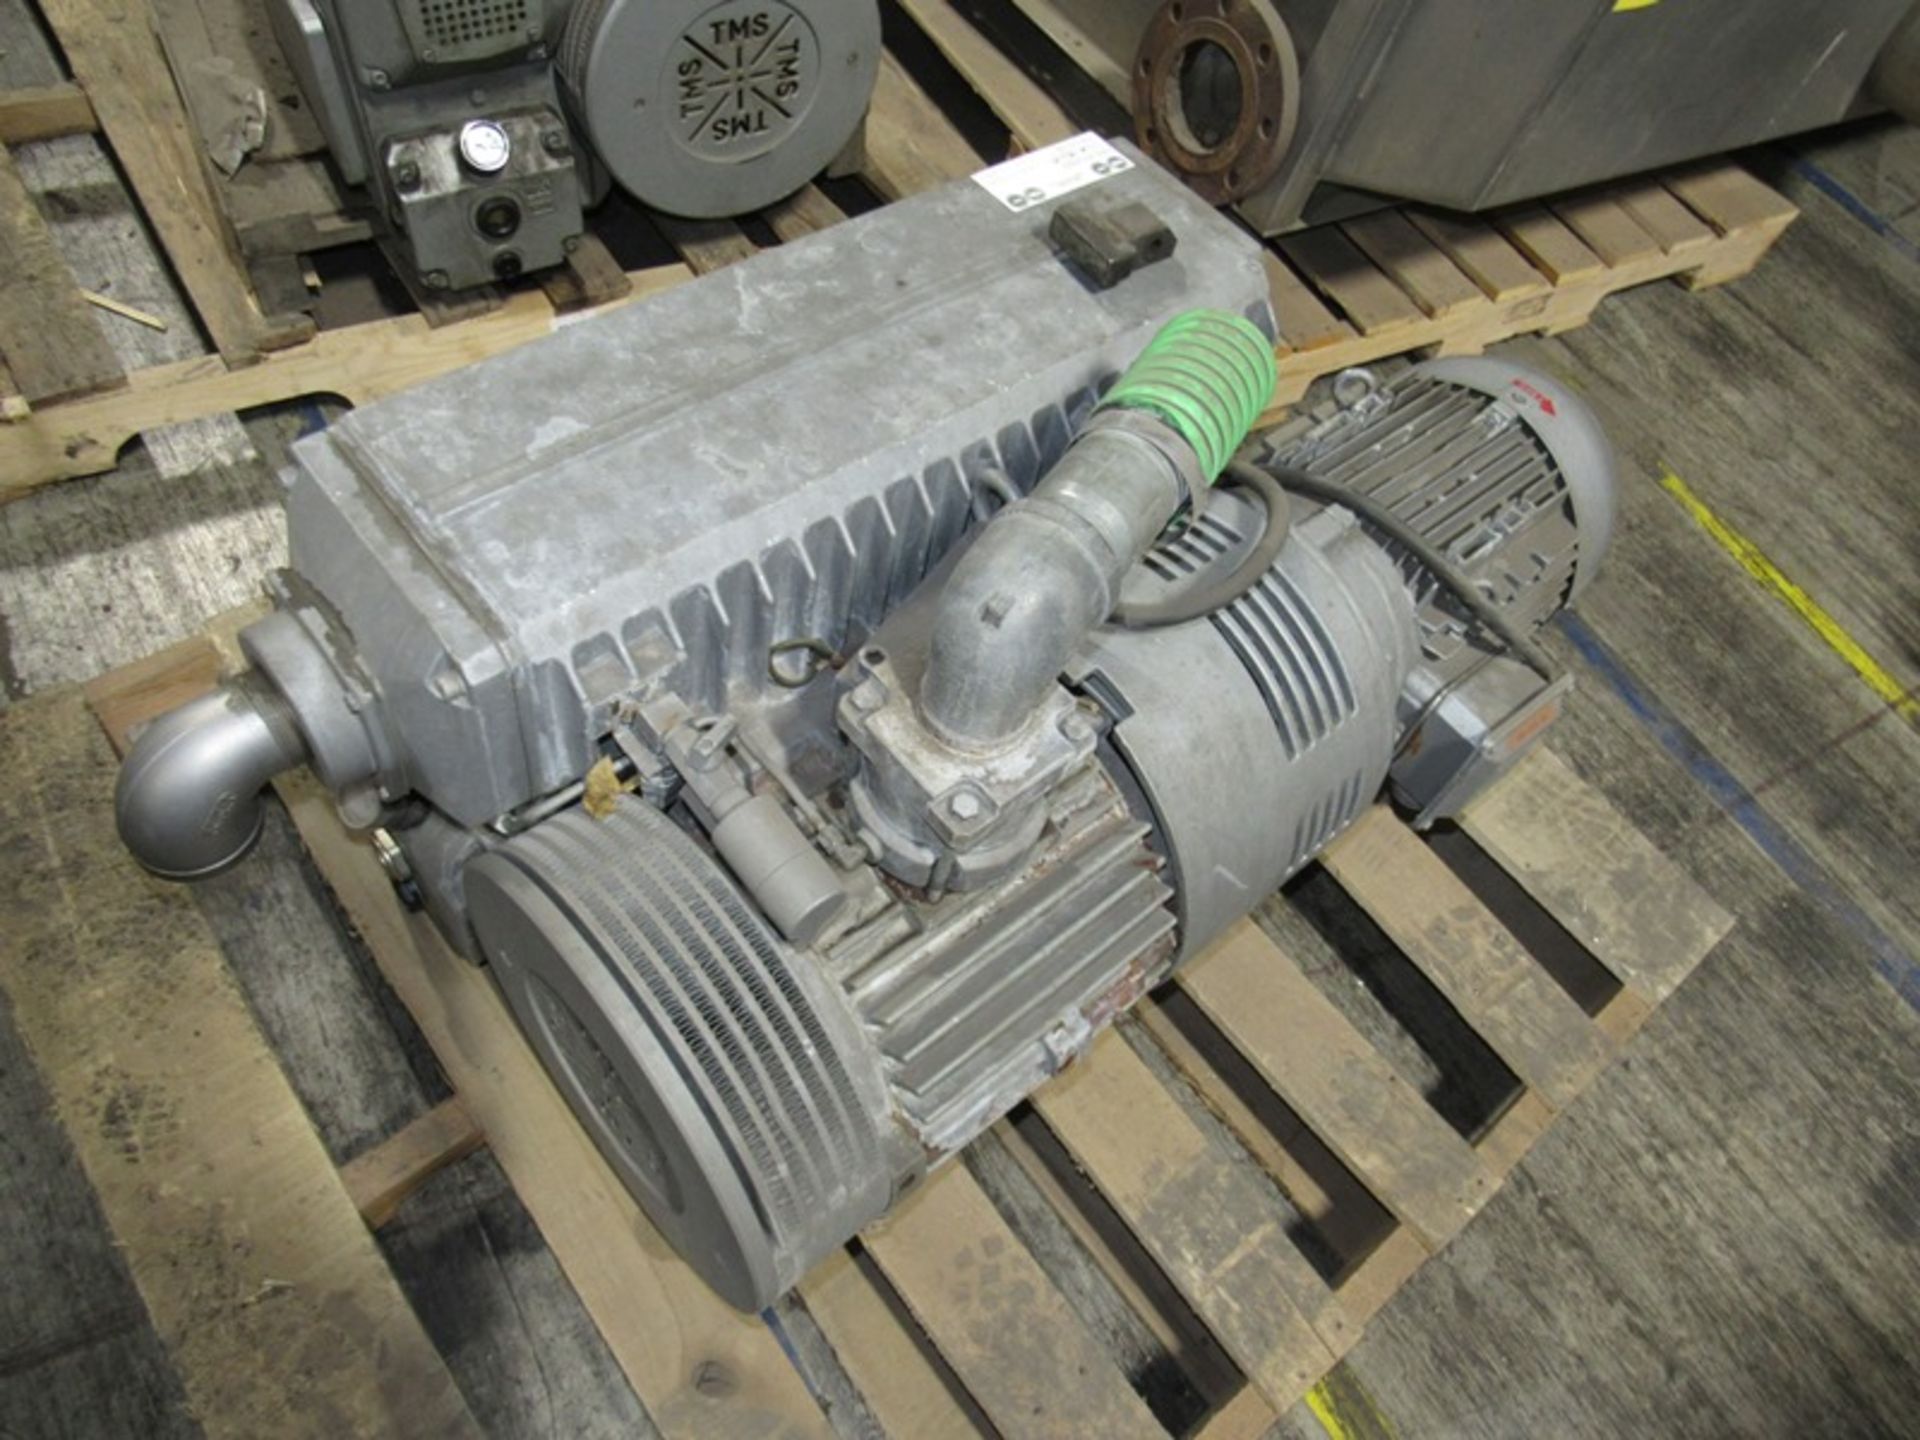 Busch Mdl. RA0250D Vacuum Pump, 10 h.p., 230/460 volts, 3 phase, rebuilt by TMS, Ser. #53208201 (